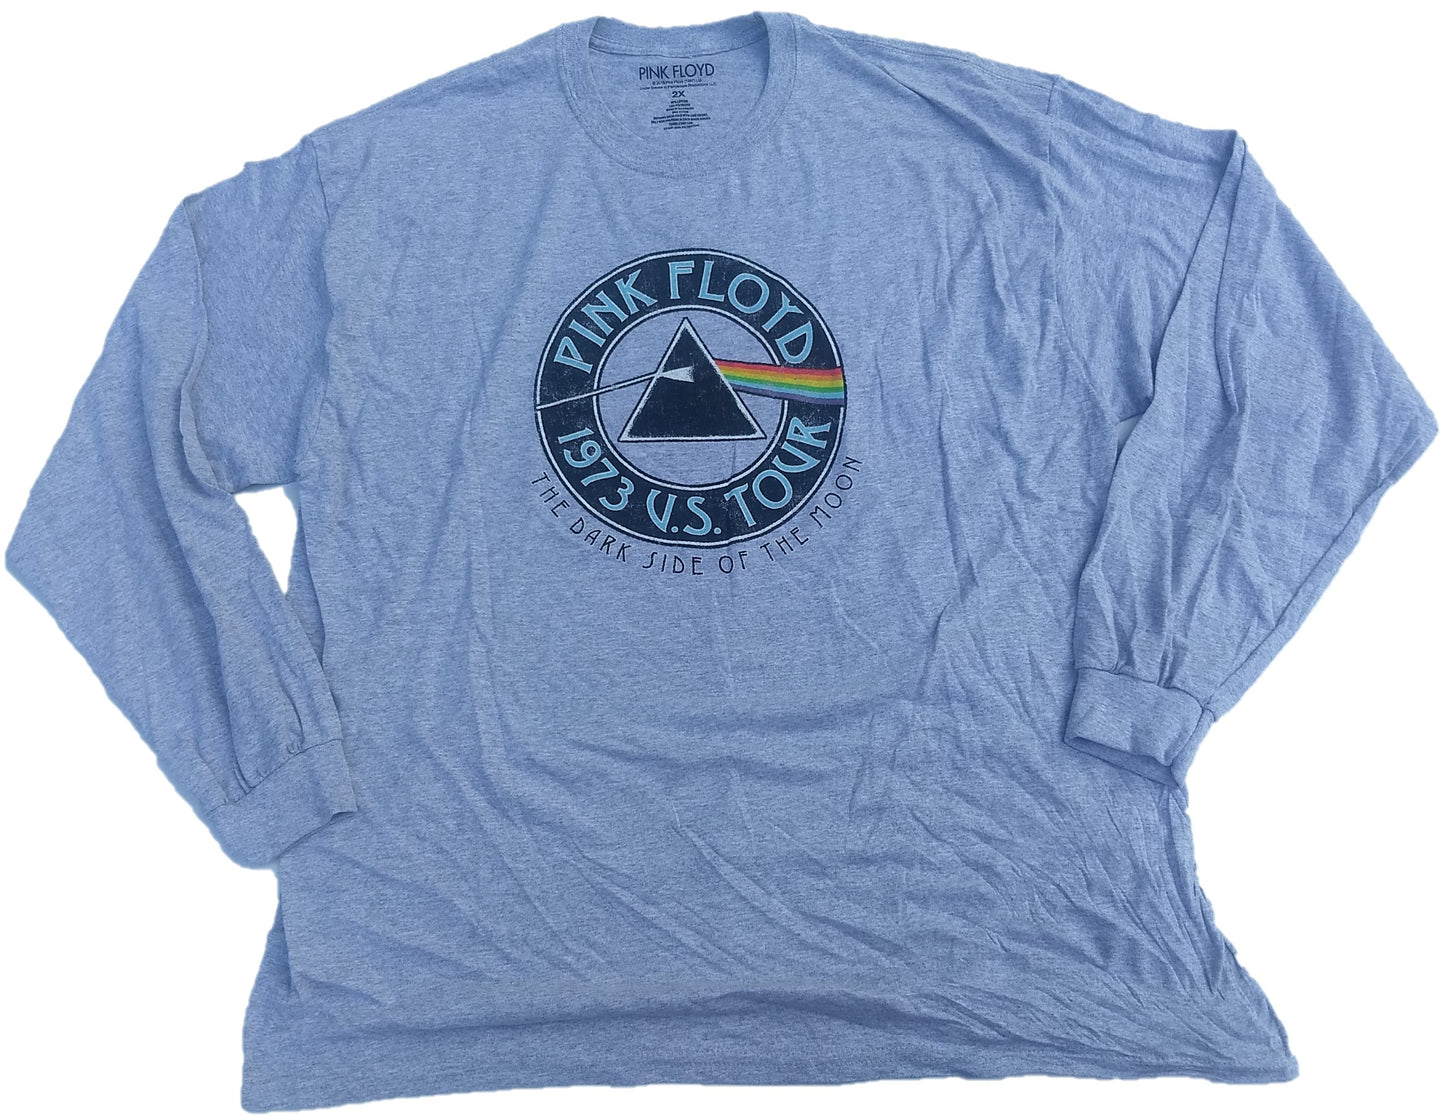 Pink Floyd 1973 U.S. Tour The Dark Side of the Moon Long Sleeve T-Shirt (Grey)